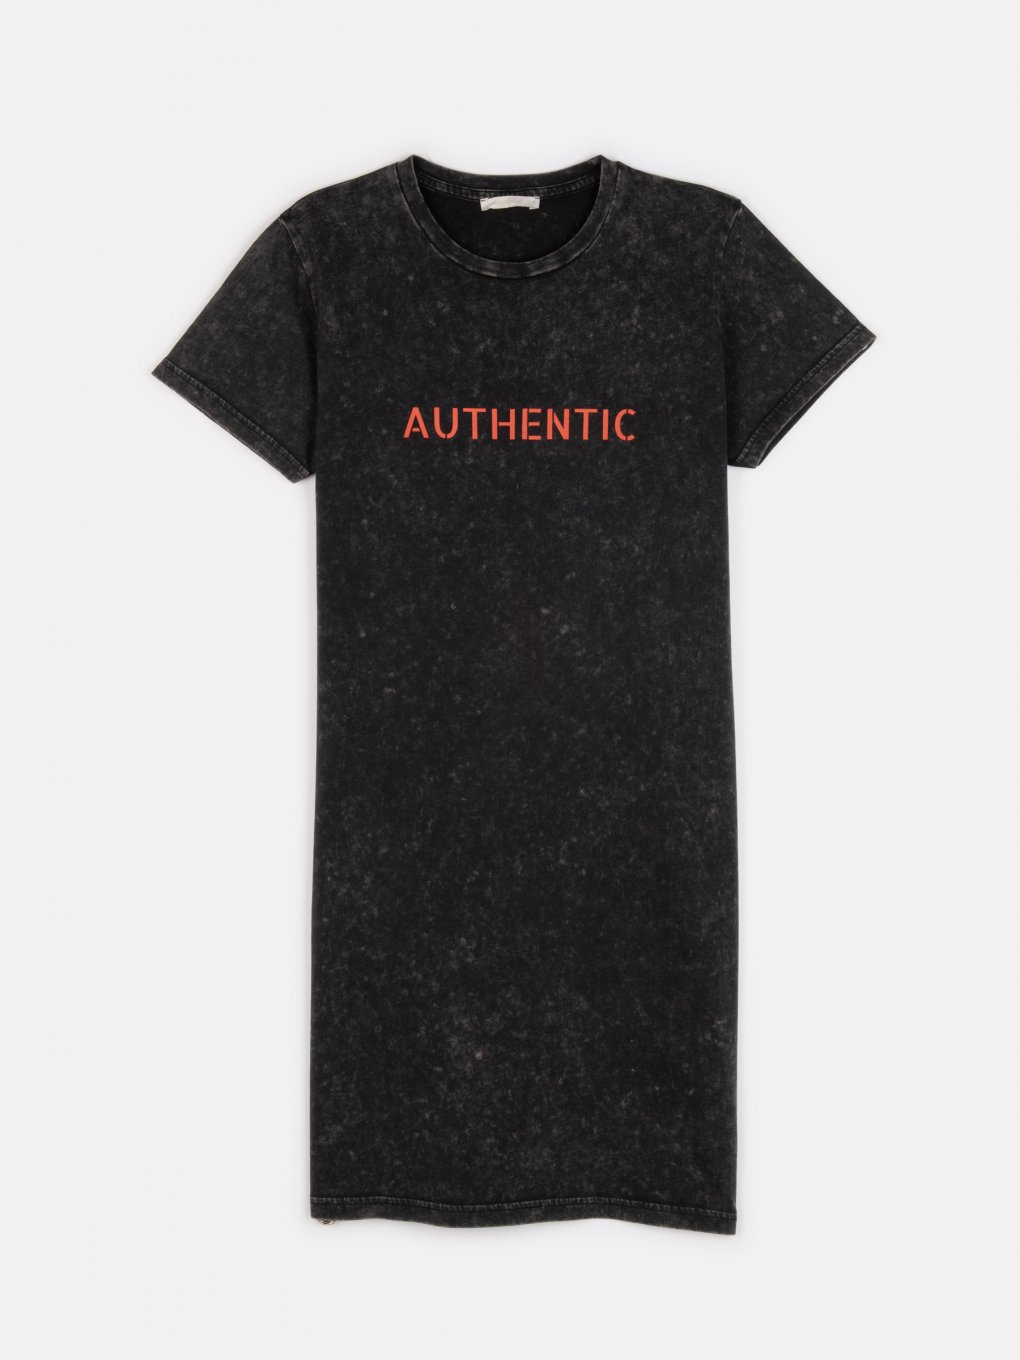 Acid wash cotton jersey t-shirt dress with slogan print